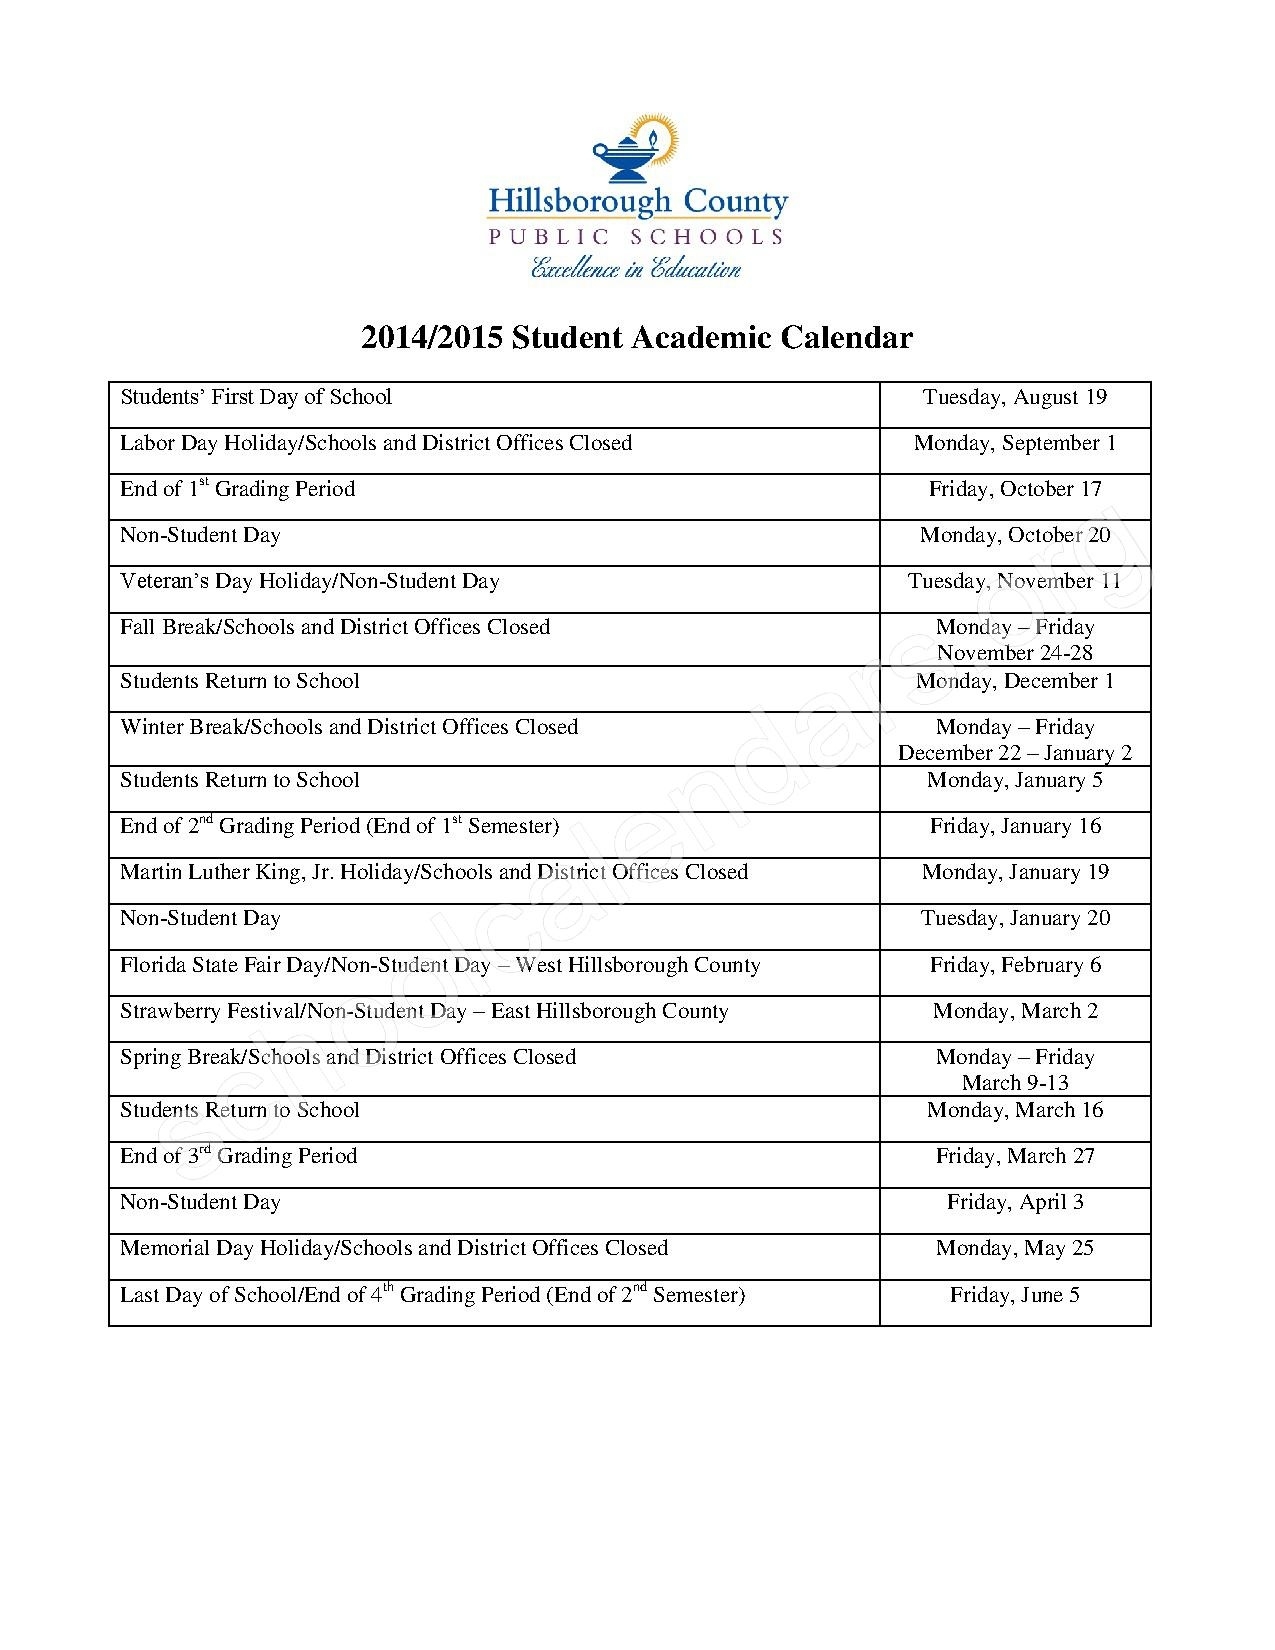 2014 2015 Student Calendar Page 1 On Hillsborough County Schools Calendar School Hillsborough County